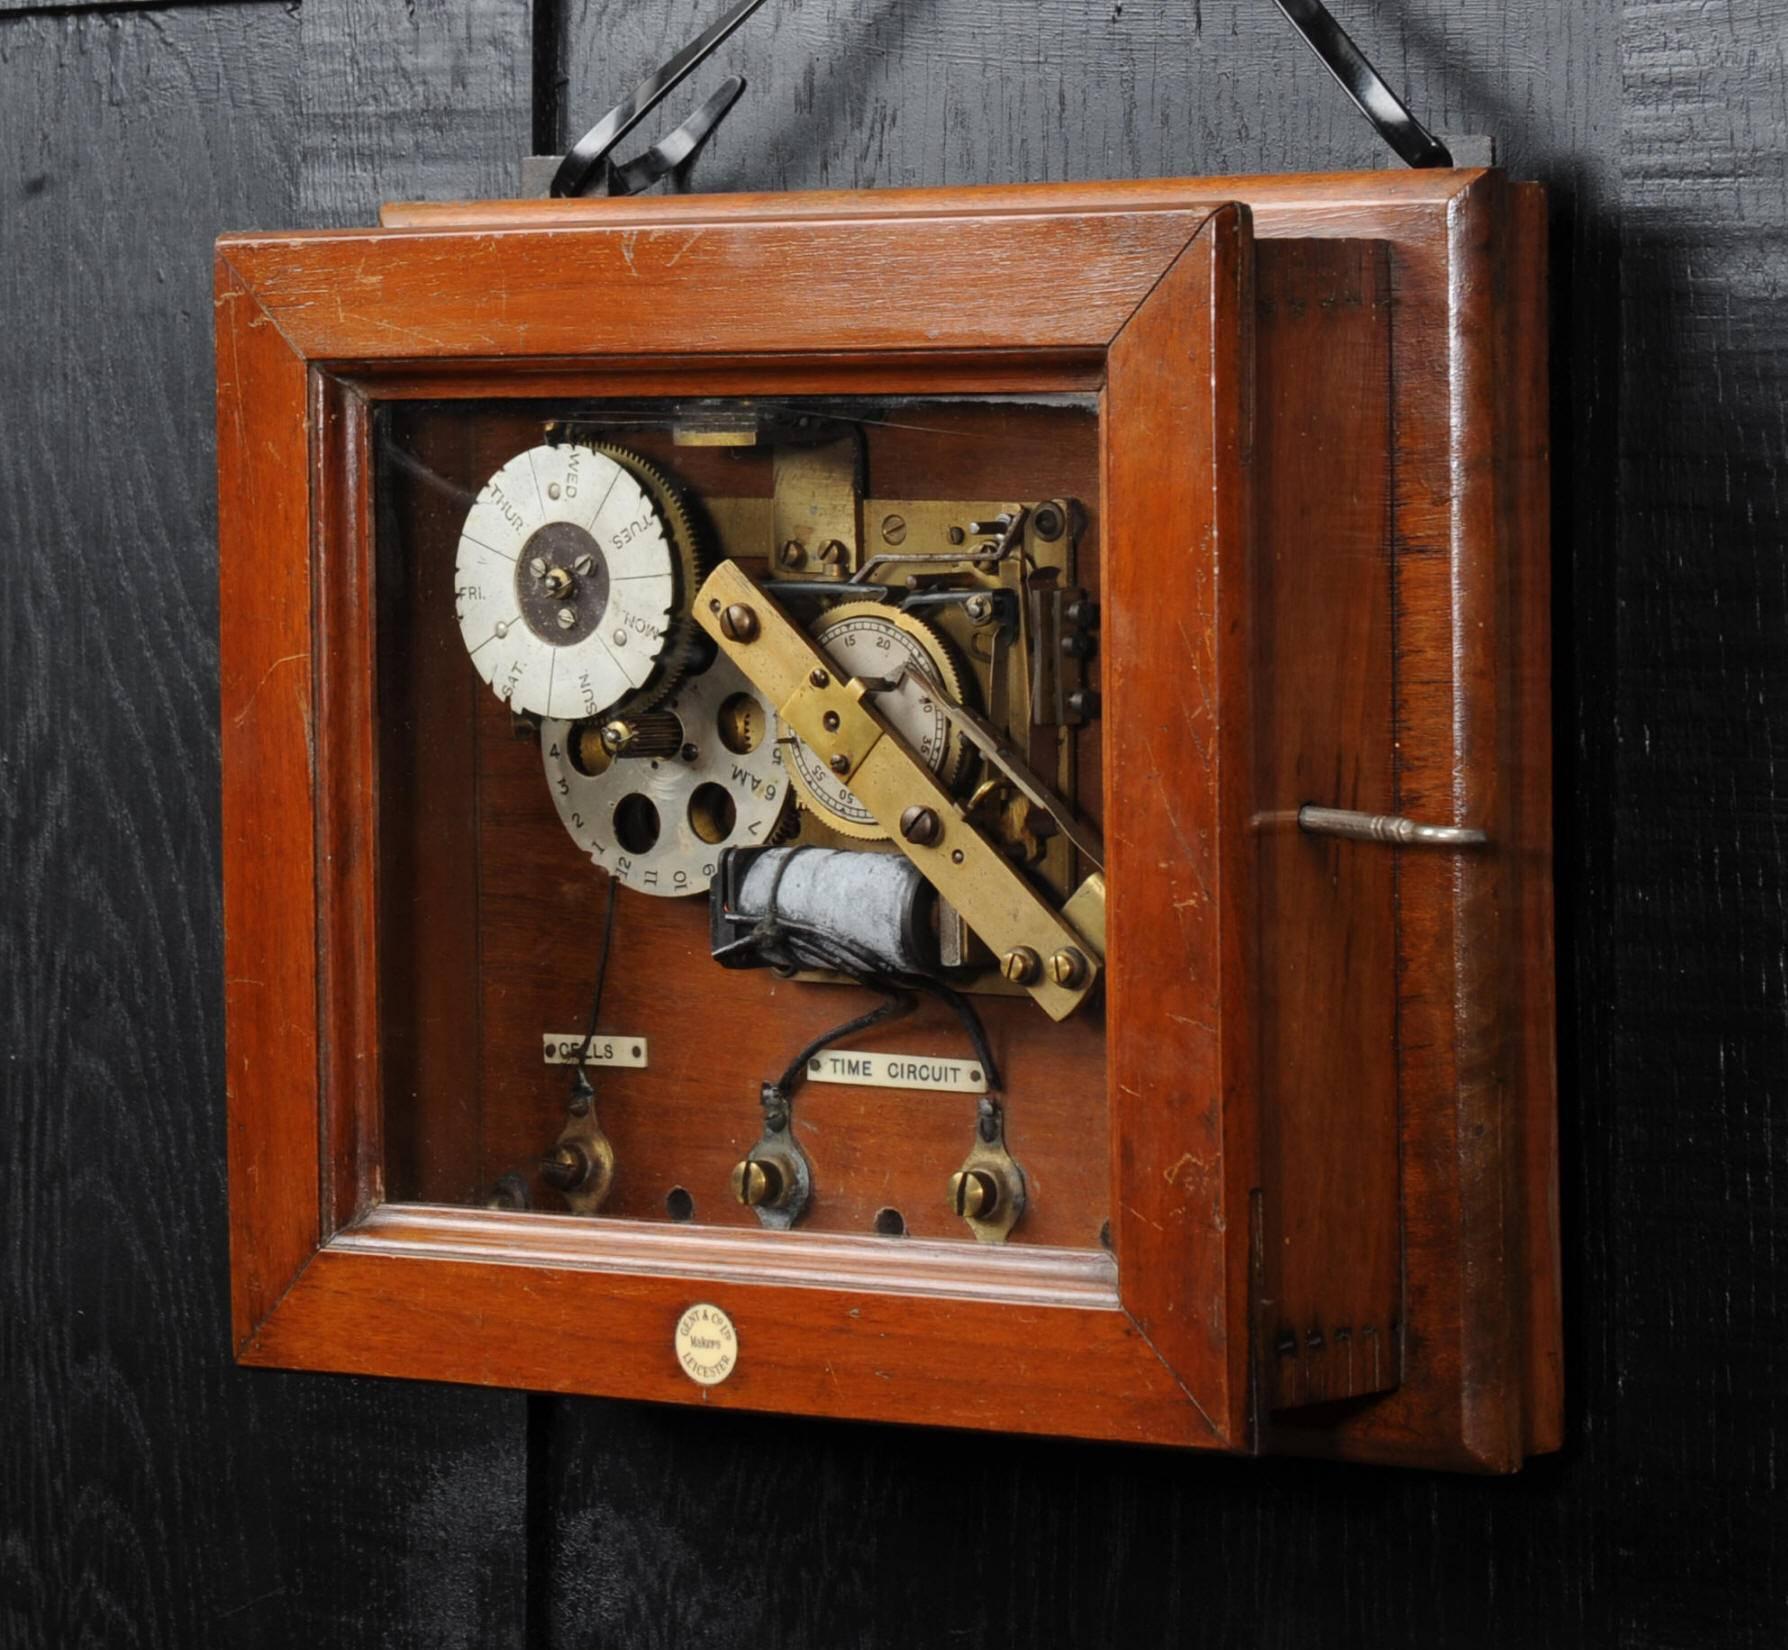 British Industrial Electro-mechanical Programmer Clock as Wall Sculpture